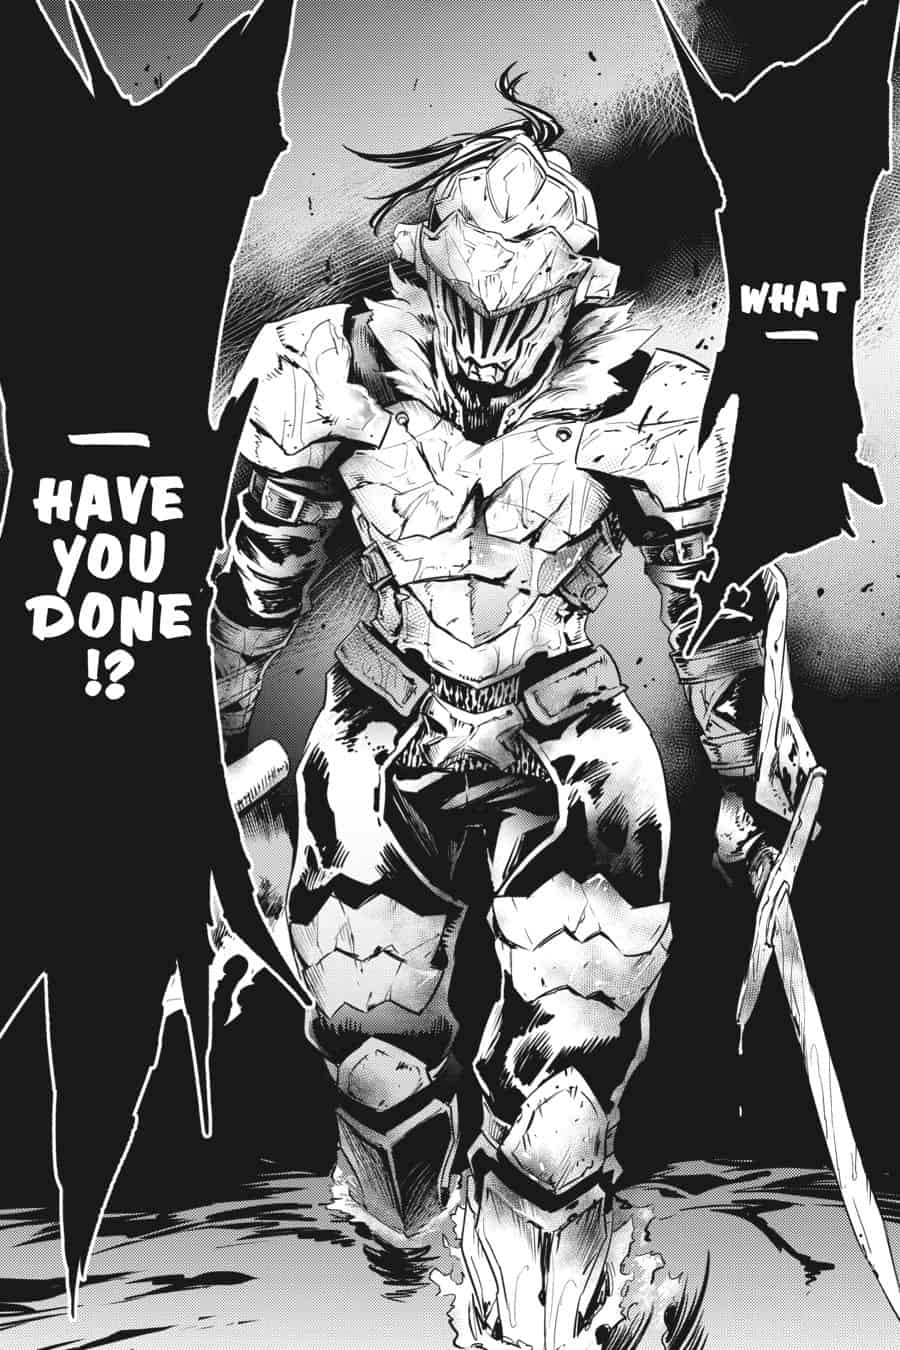 10 incredible manga like Goblin Slayer that everyone will enjoy